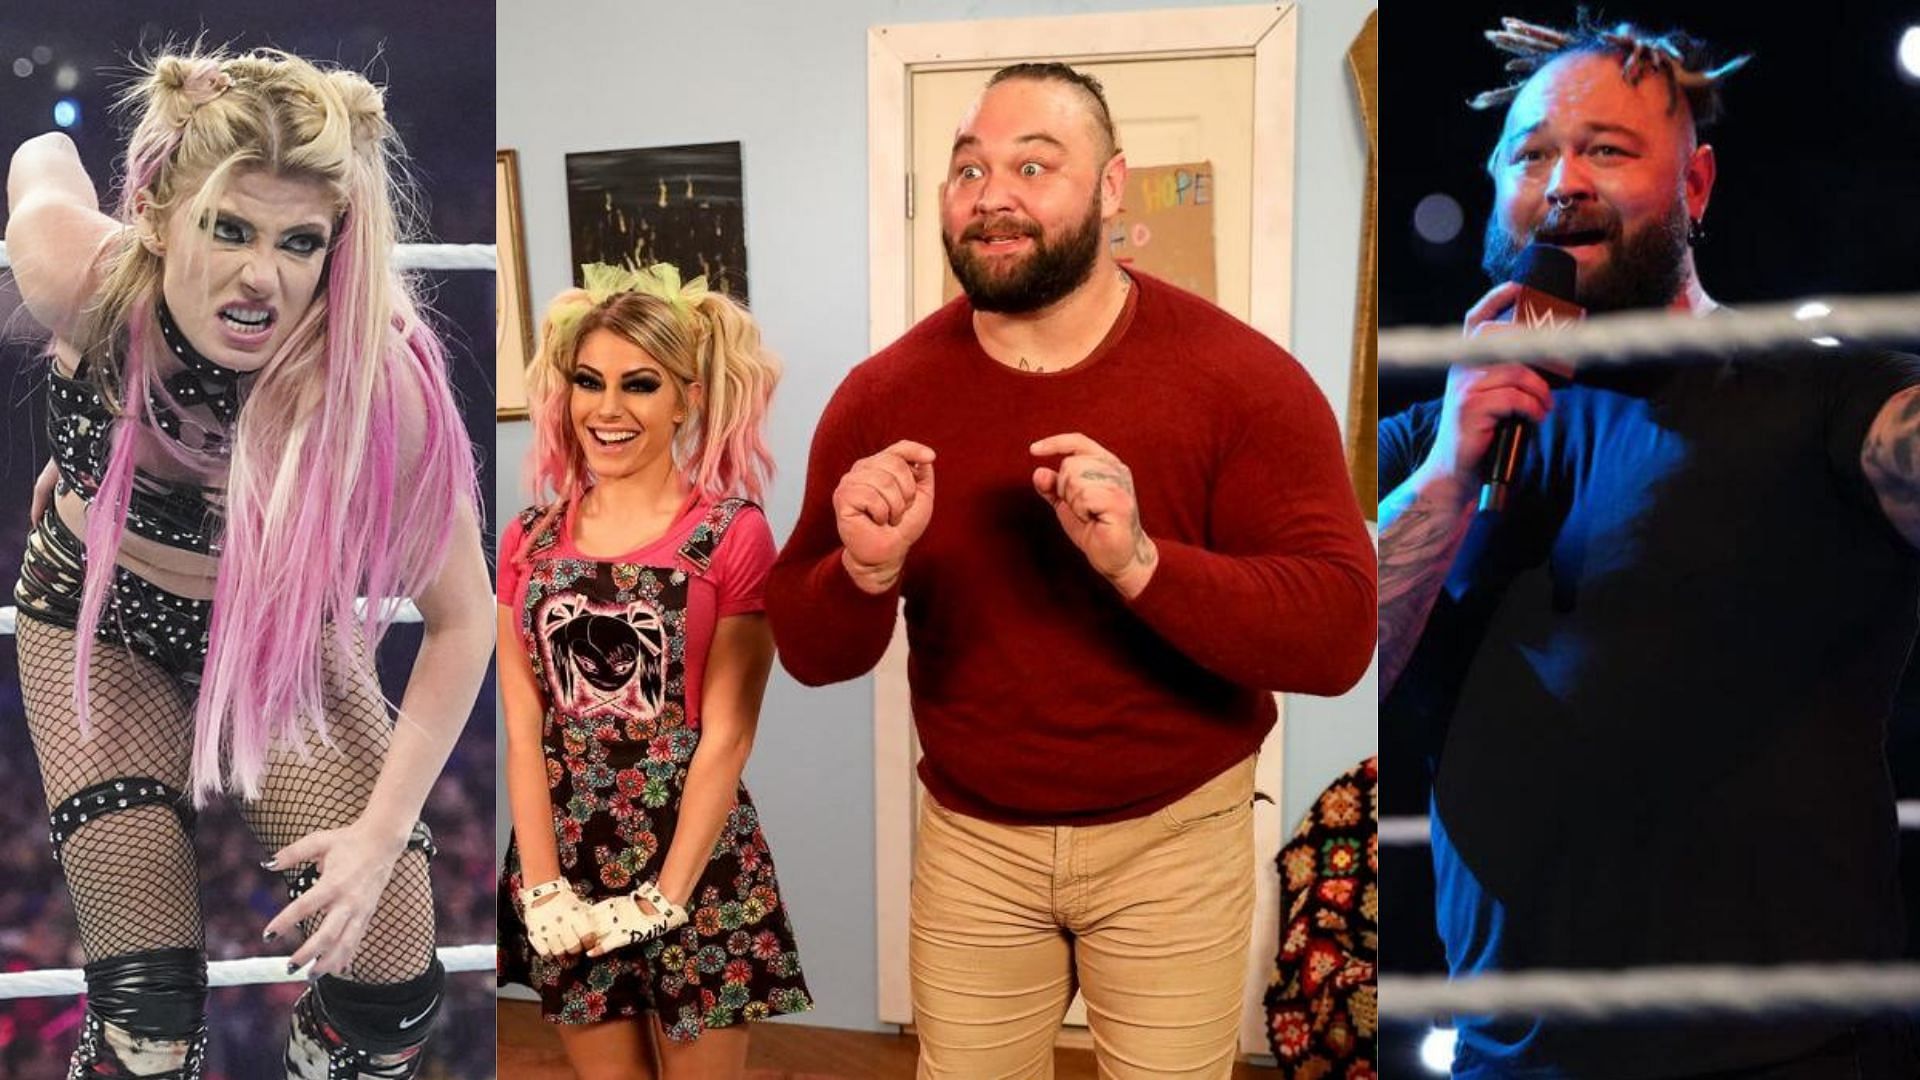 WWE Superstars Alexa Bliss and Bray Wyatt